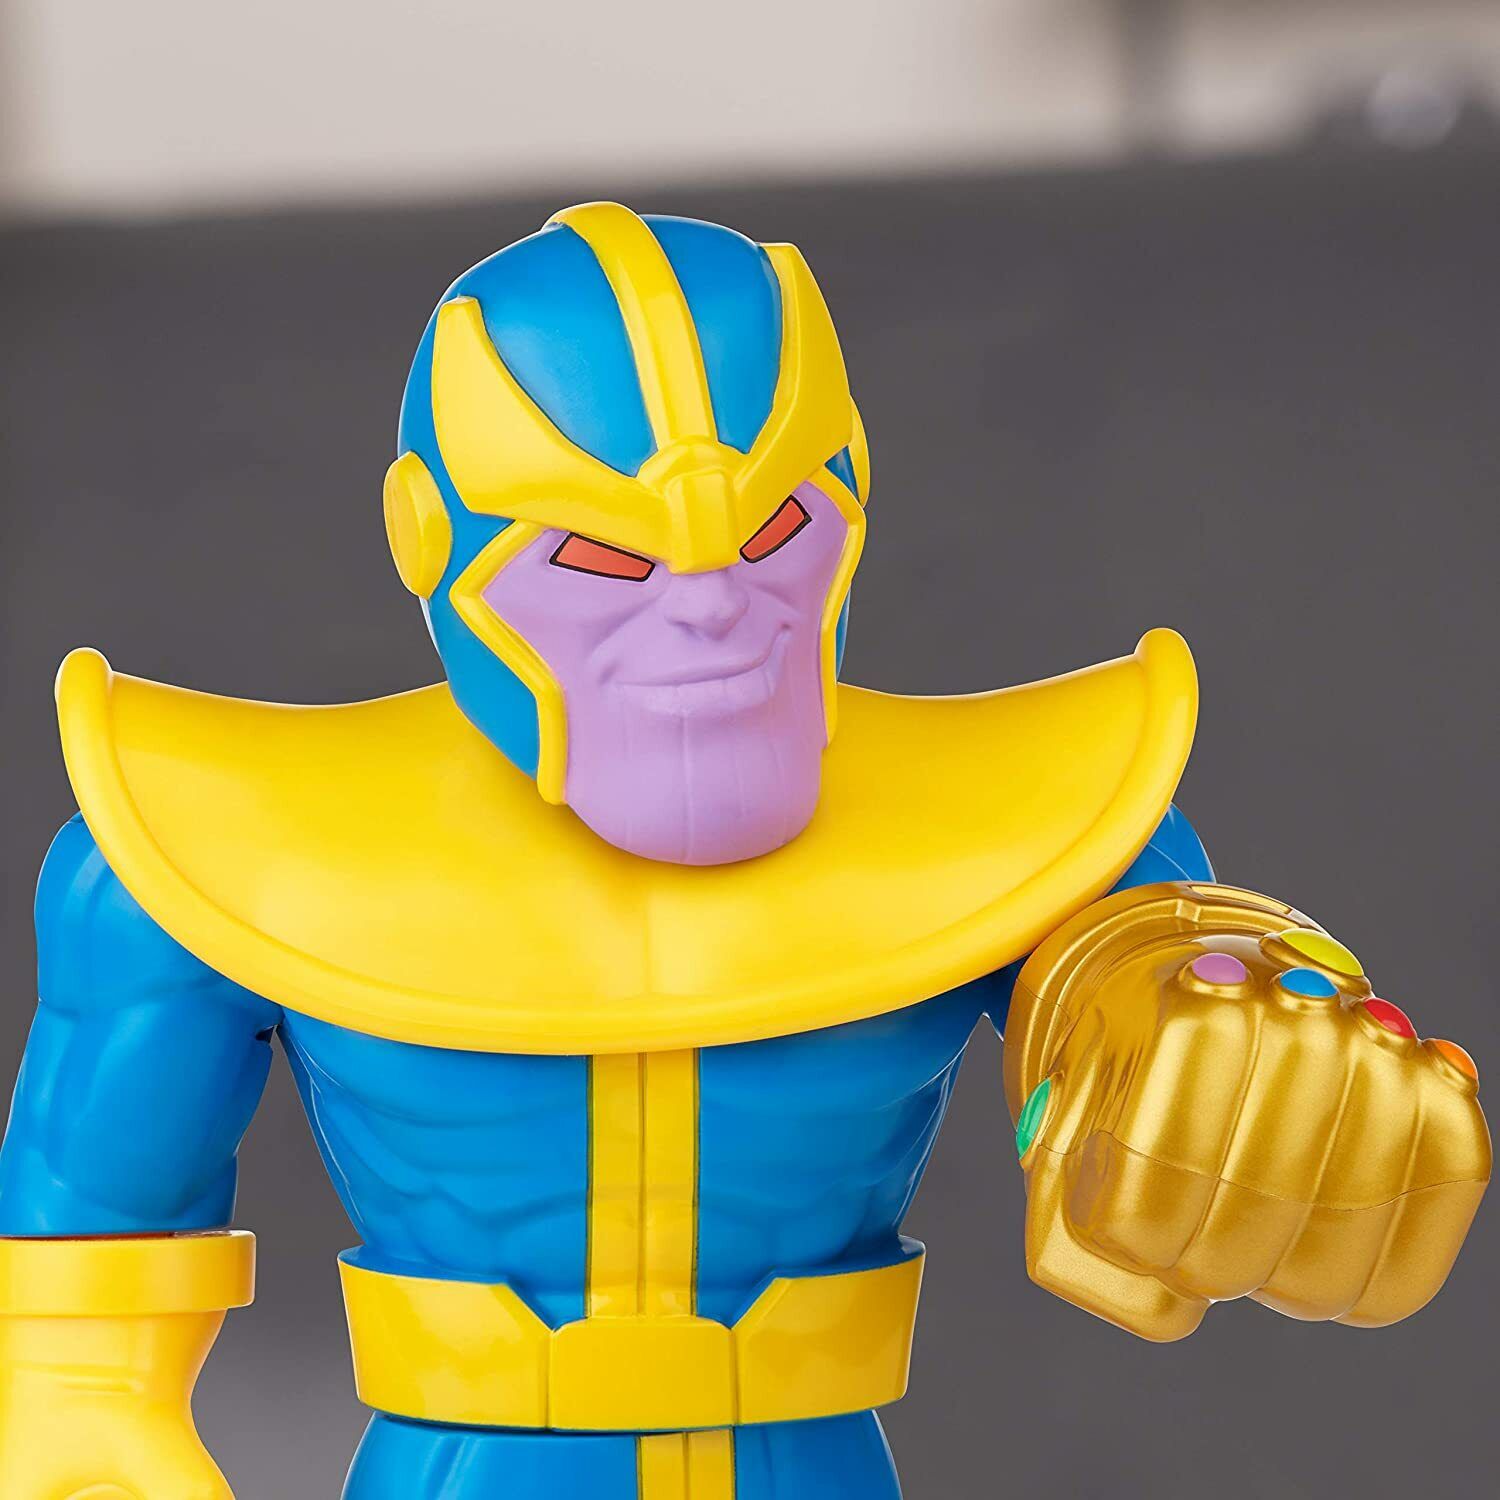 New Playskool Heroes Marvel Mega Mighties Thanos Action Figure Toy